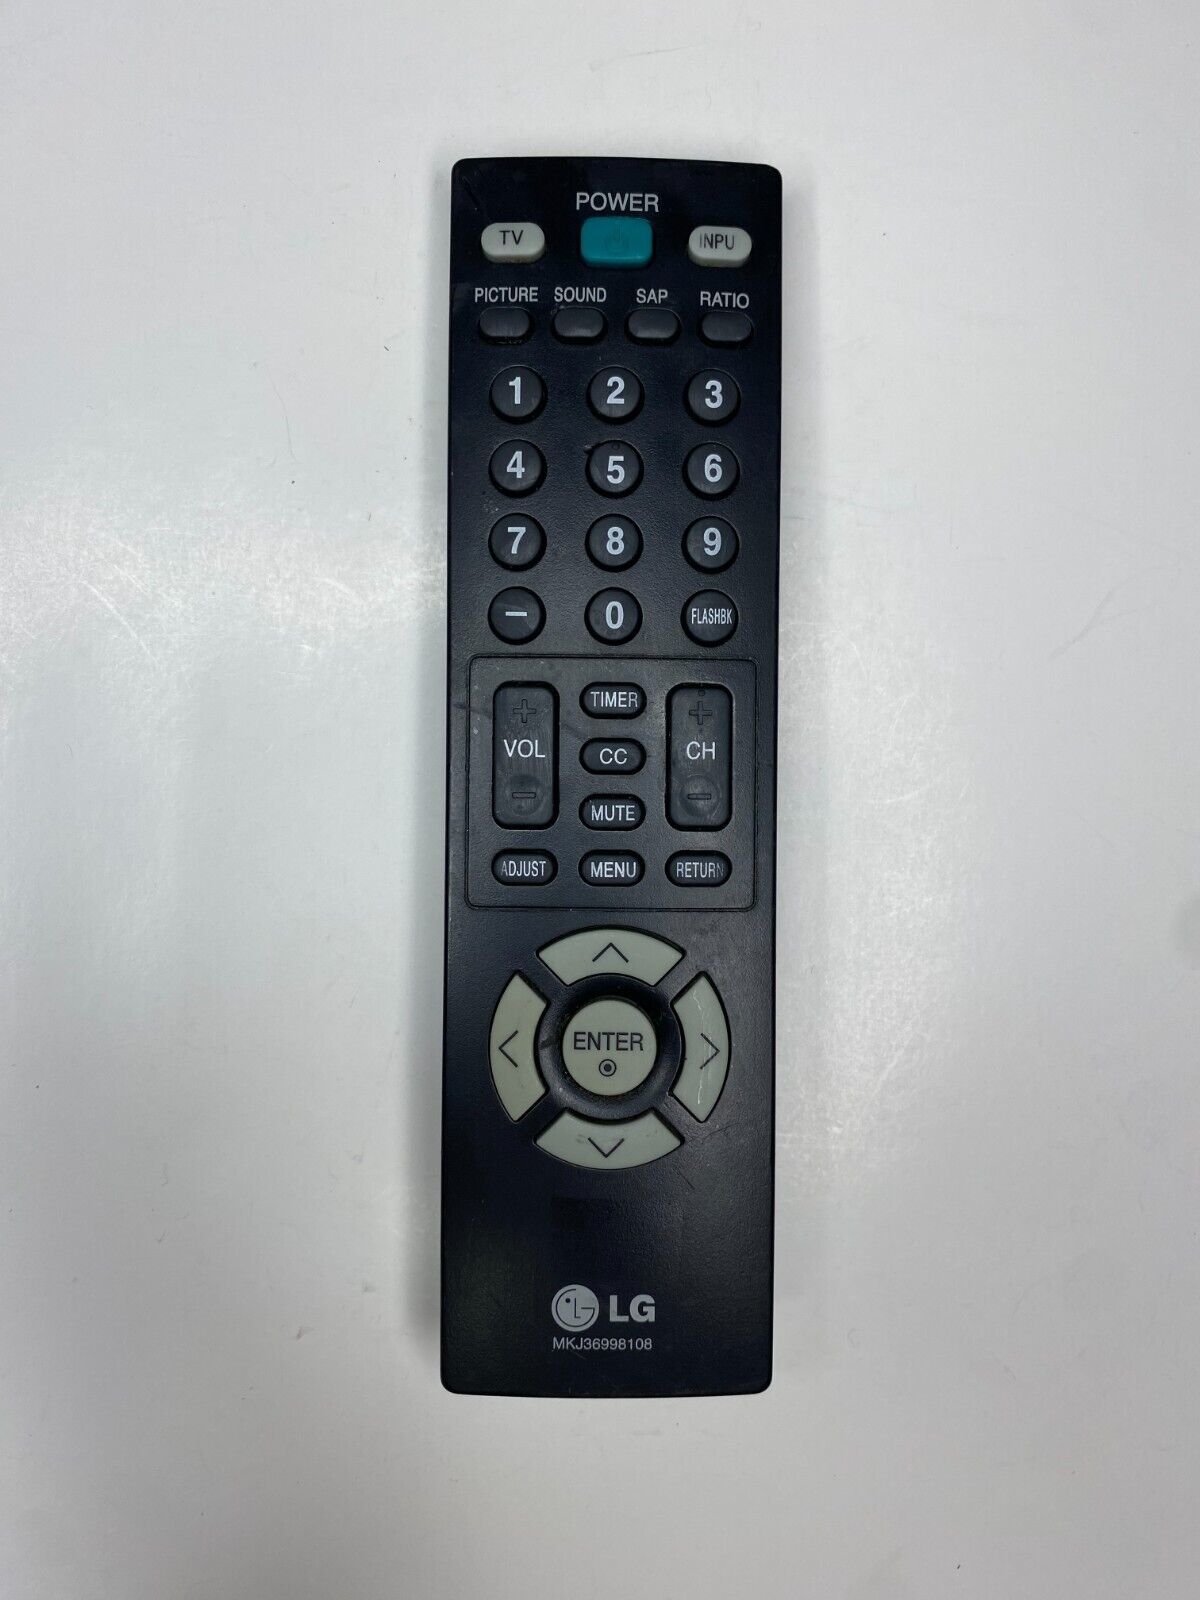 Primary image for LG MKJ36998108 TV Remote Control, Black - OEM Original for 32LG3DC +more